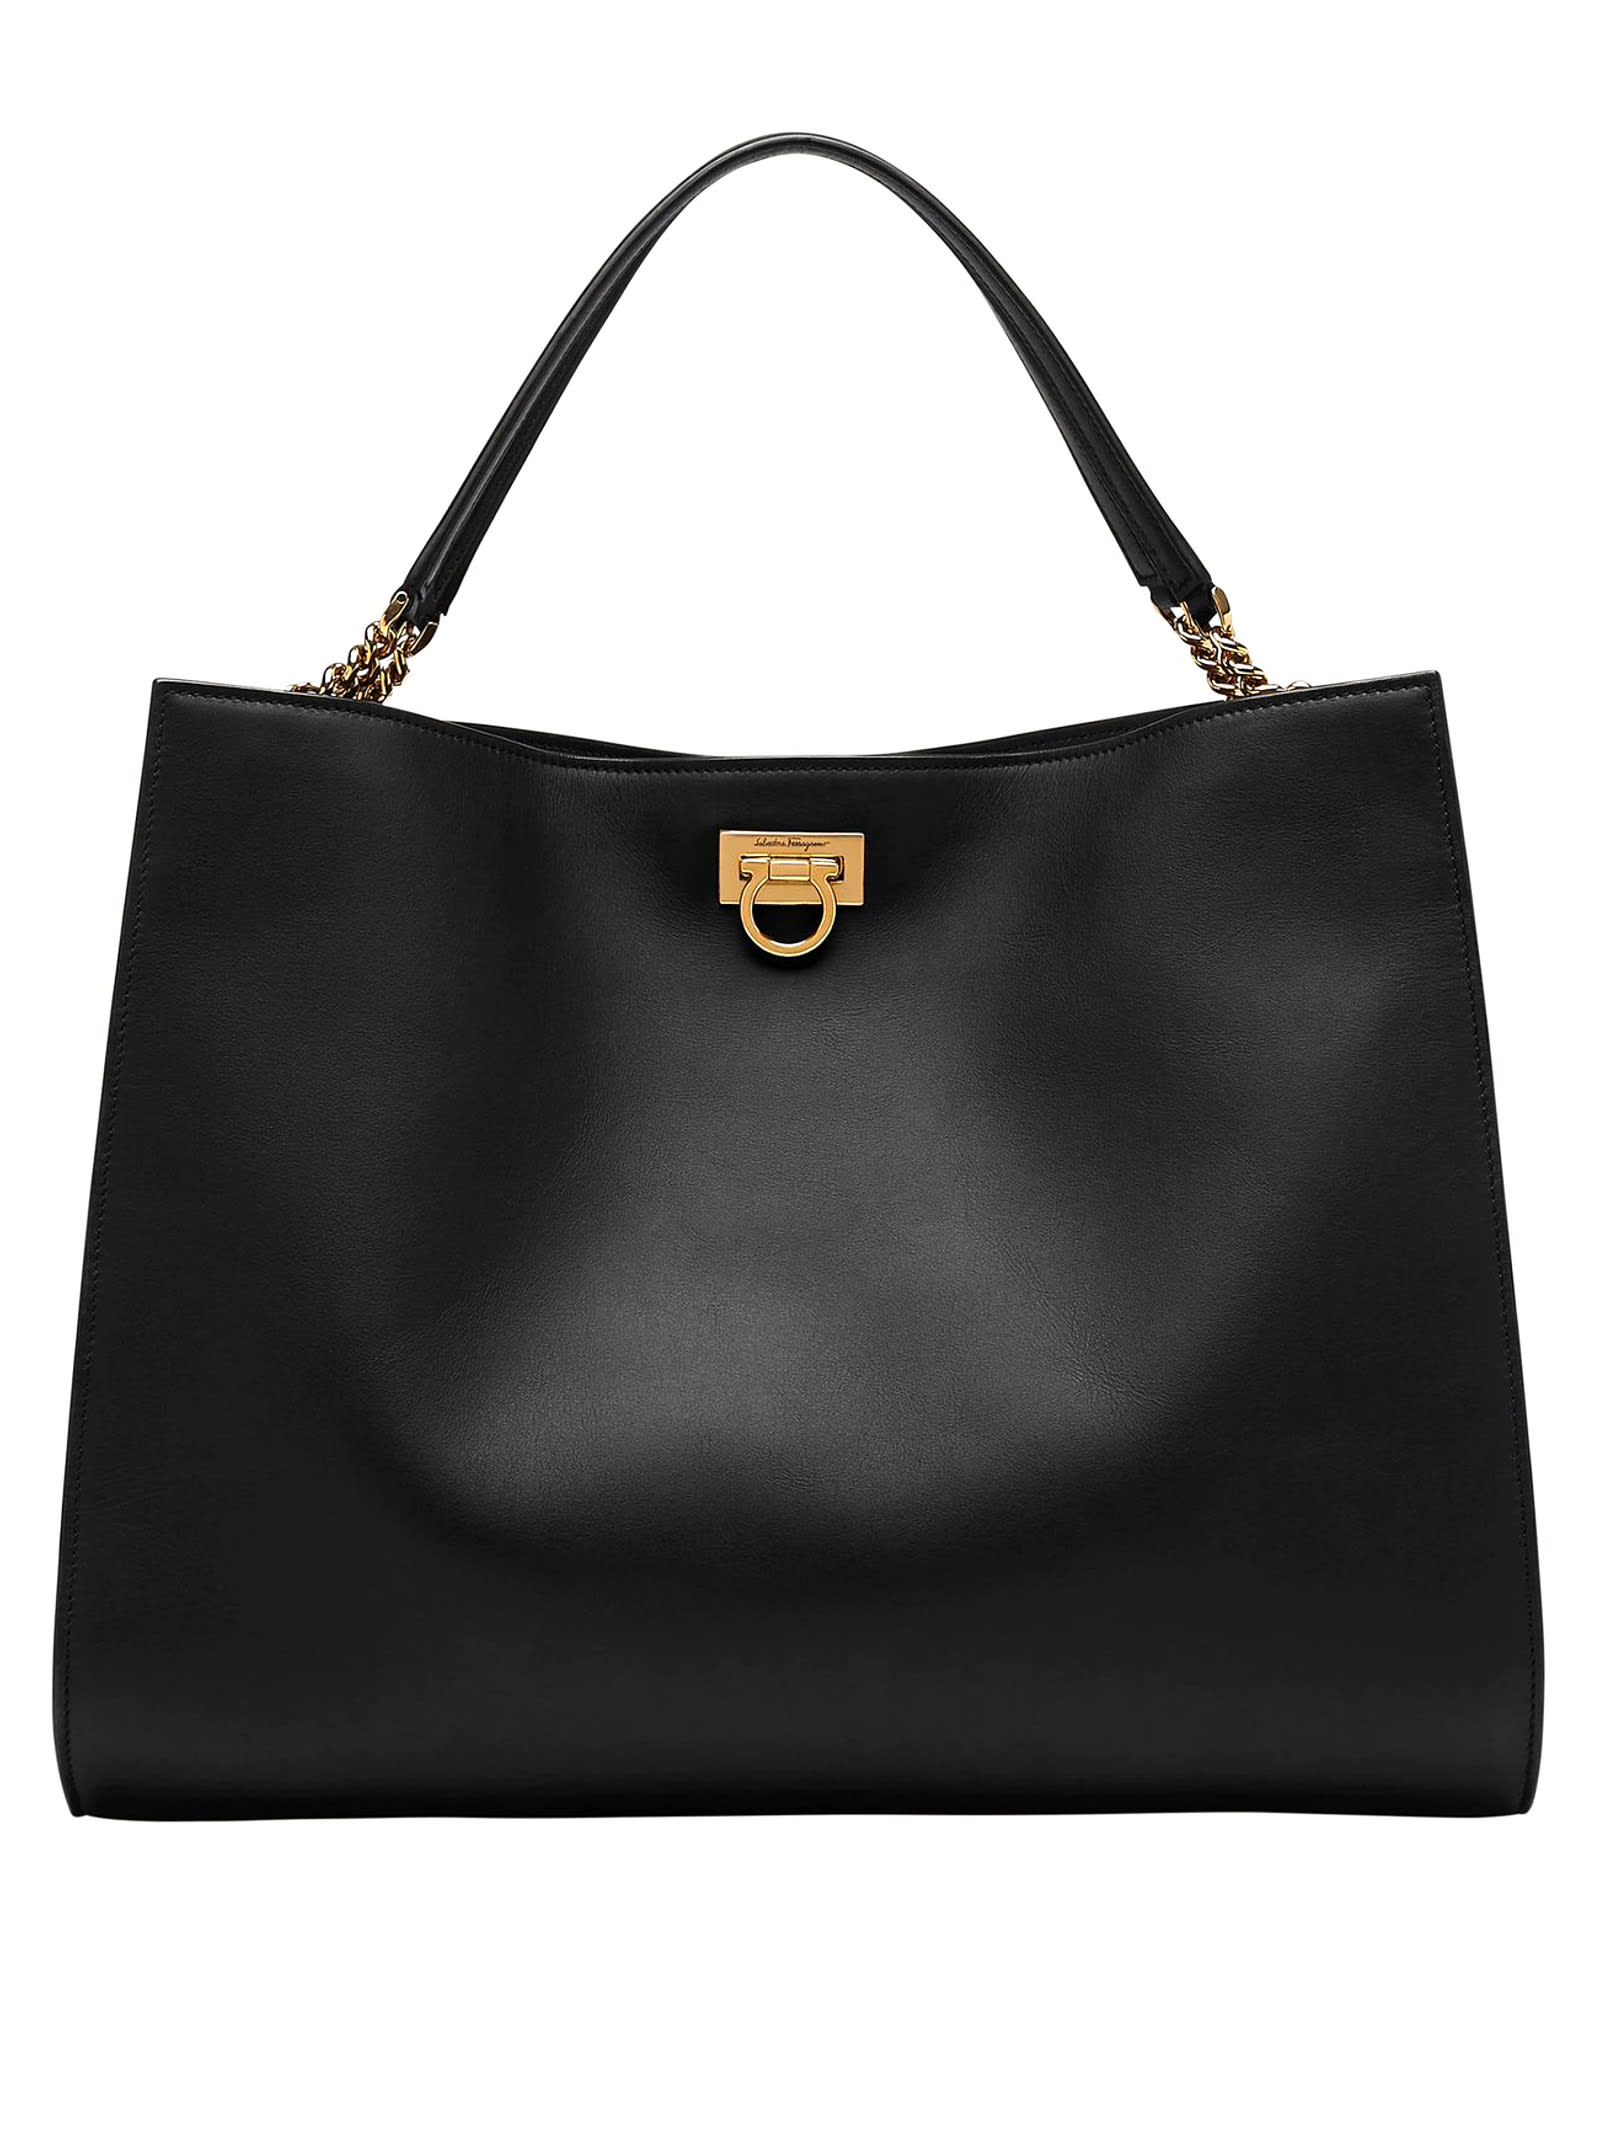 Salvatore Ferragamo Black Leather Trifolio Bag